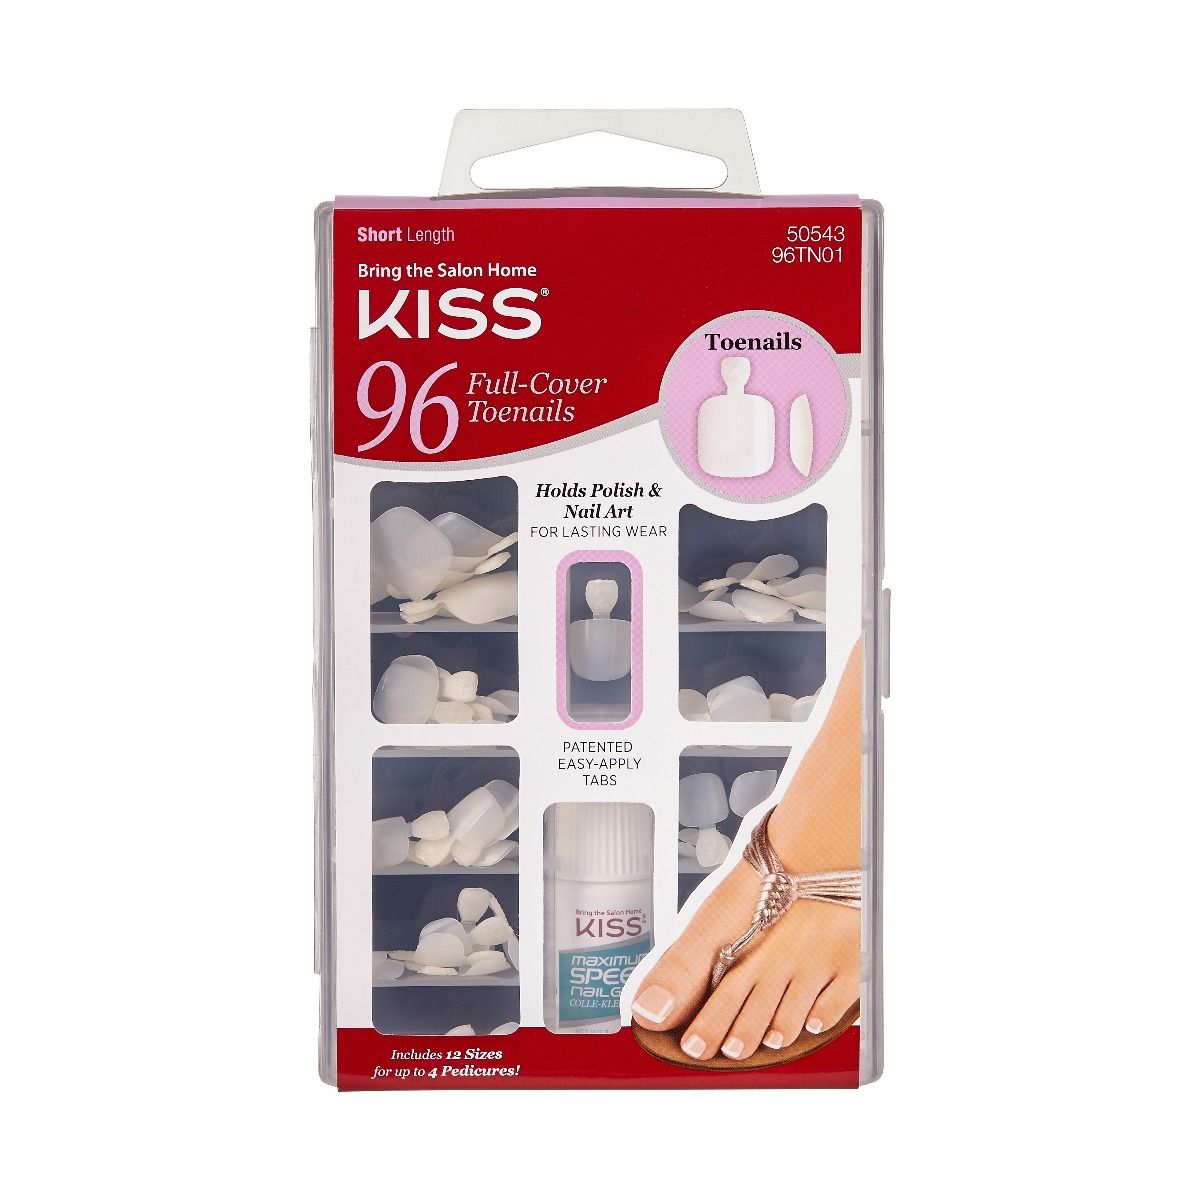 KISS 96 FULL COVER TOENAILS 96TN01